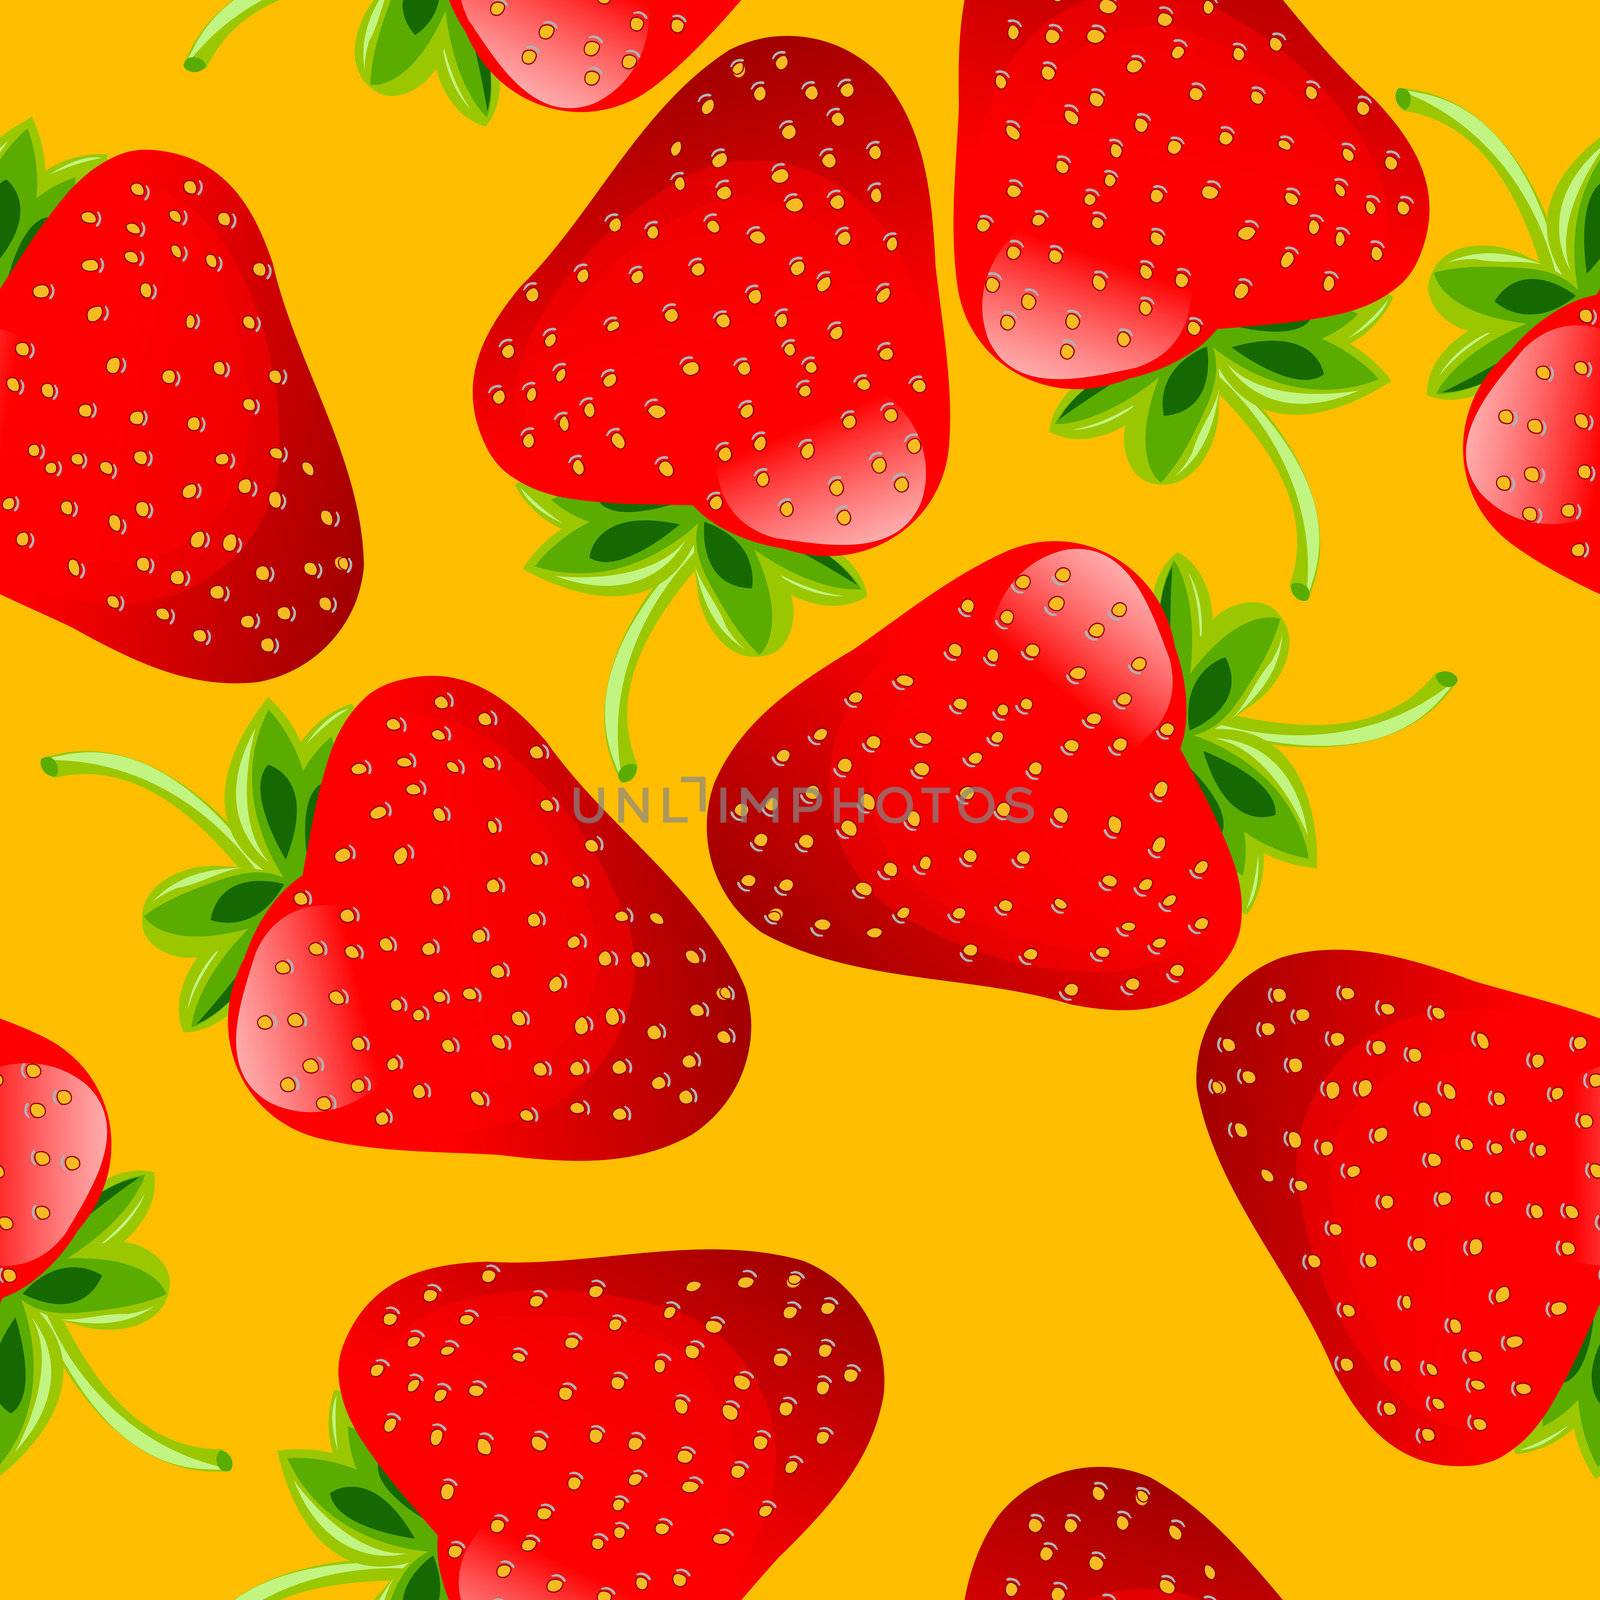 strawberries pattern by Lirch